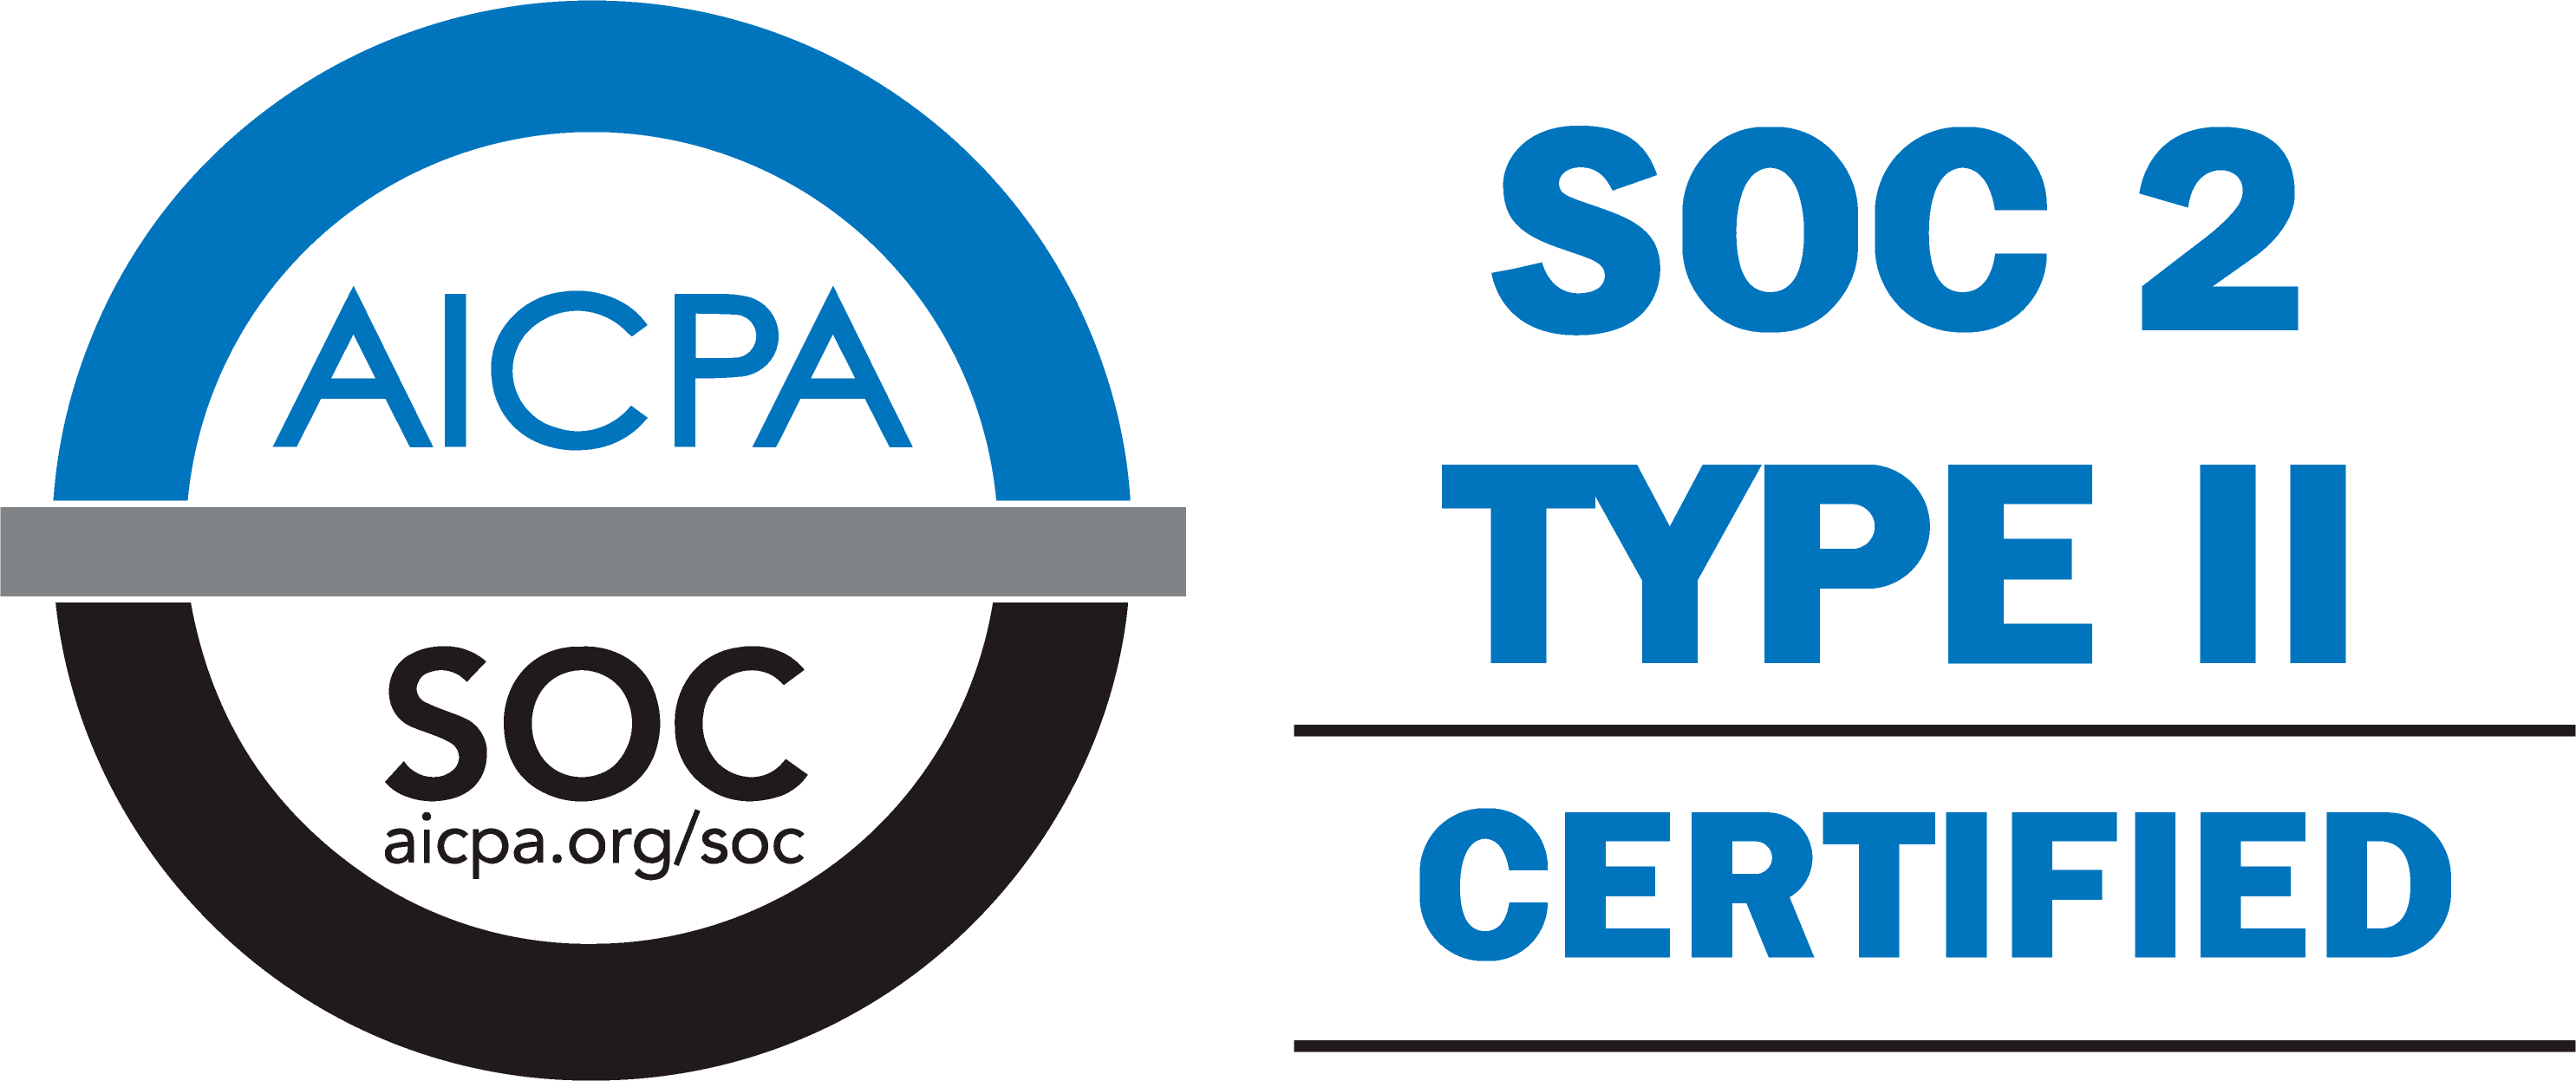 AICPA-SOC-2-TYPE-II-Certified